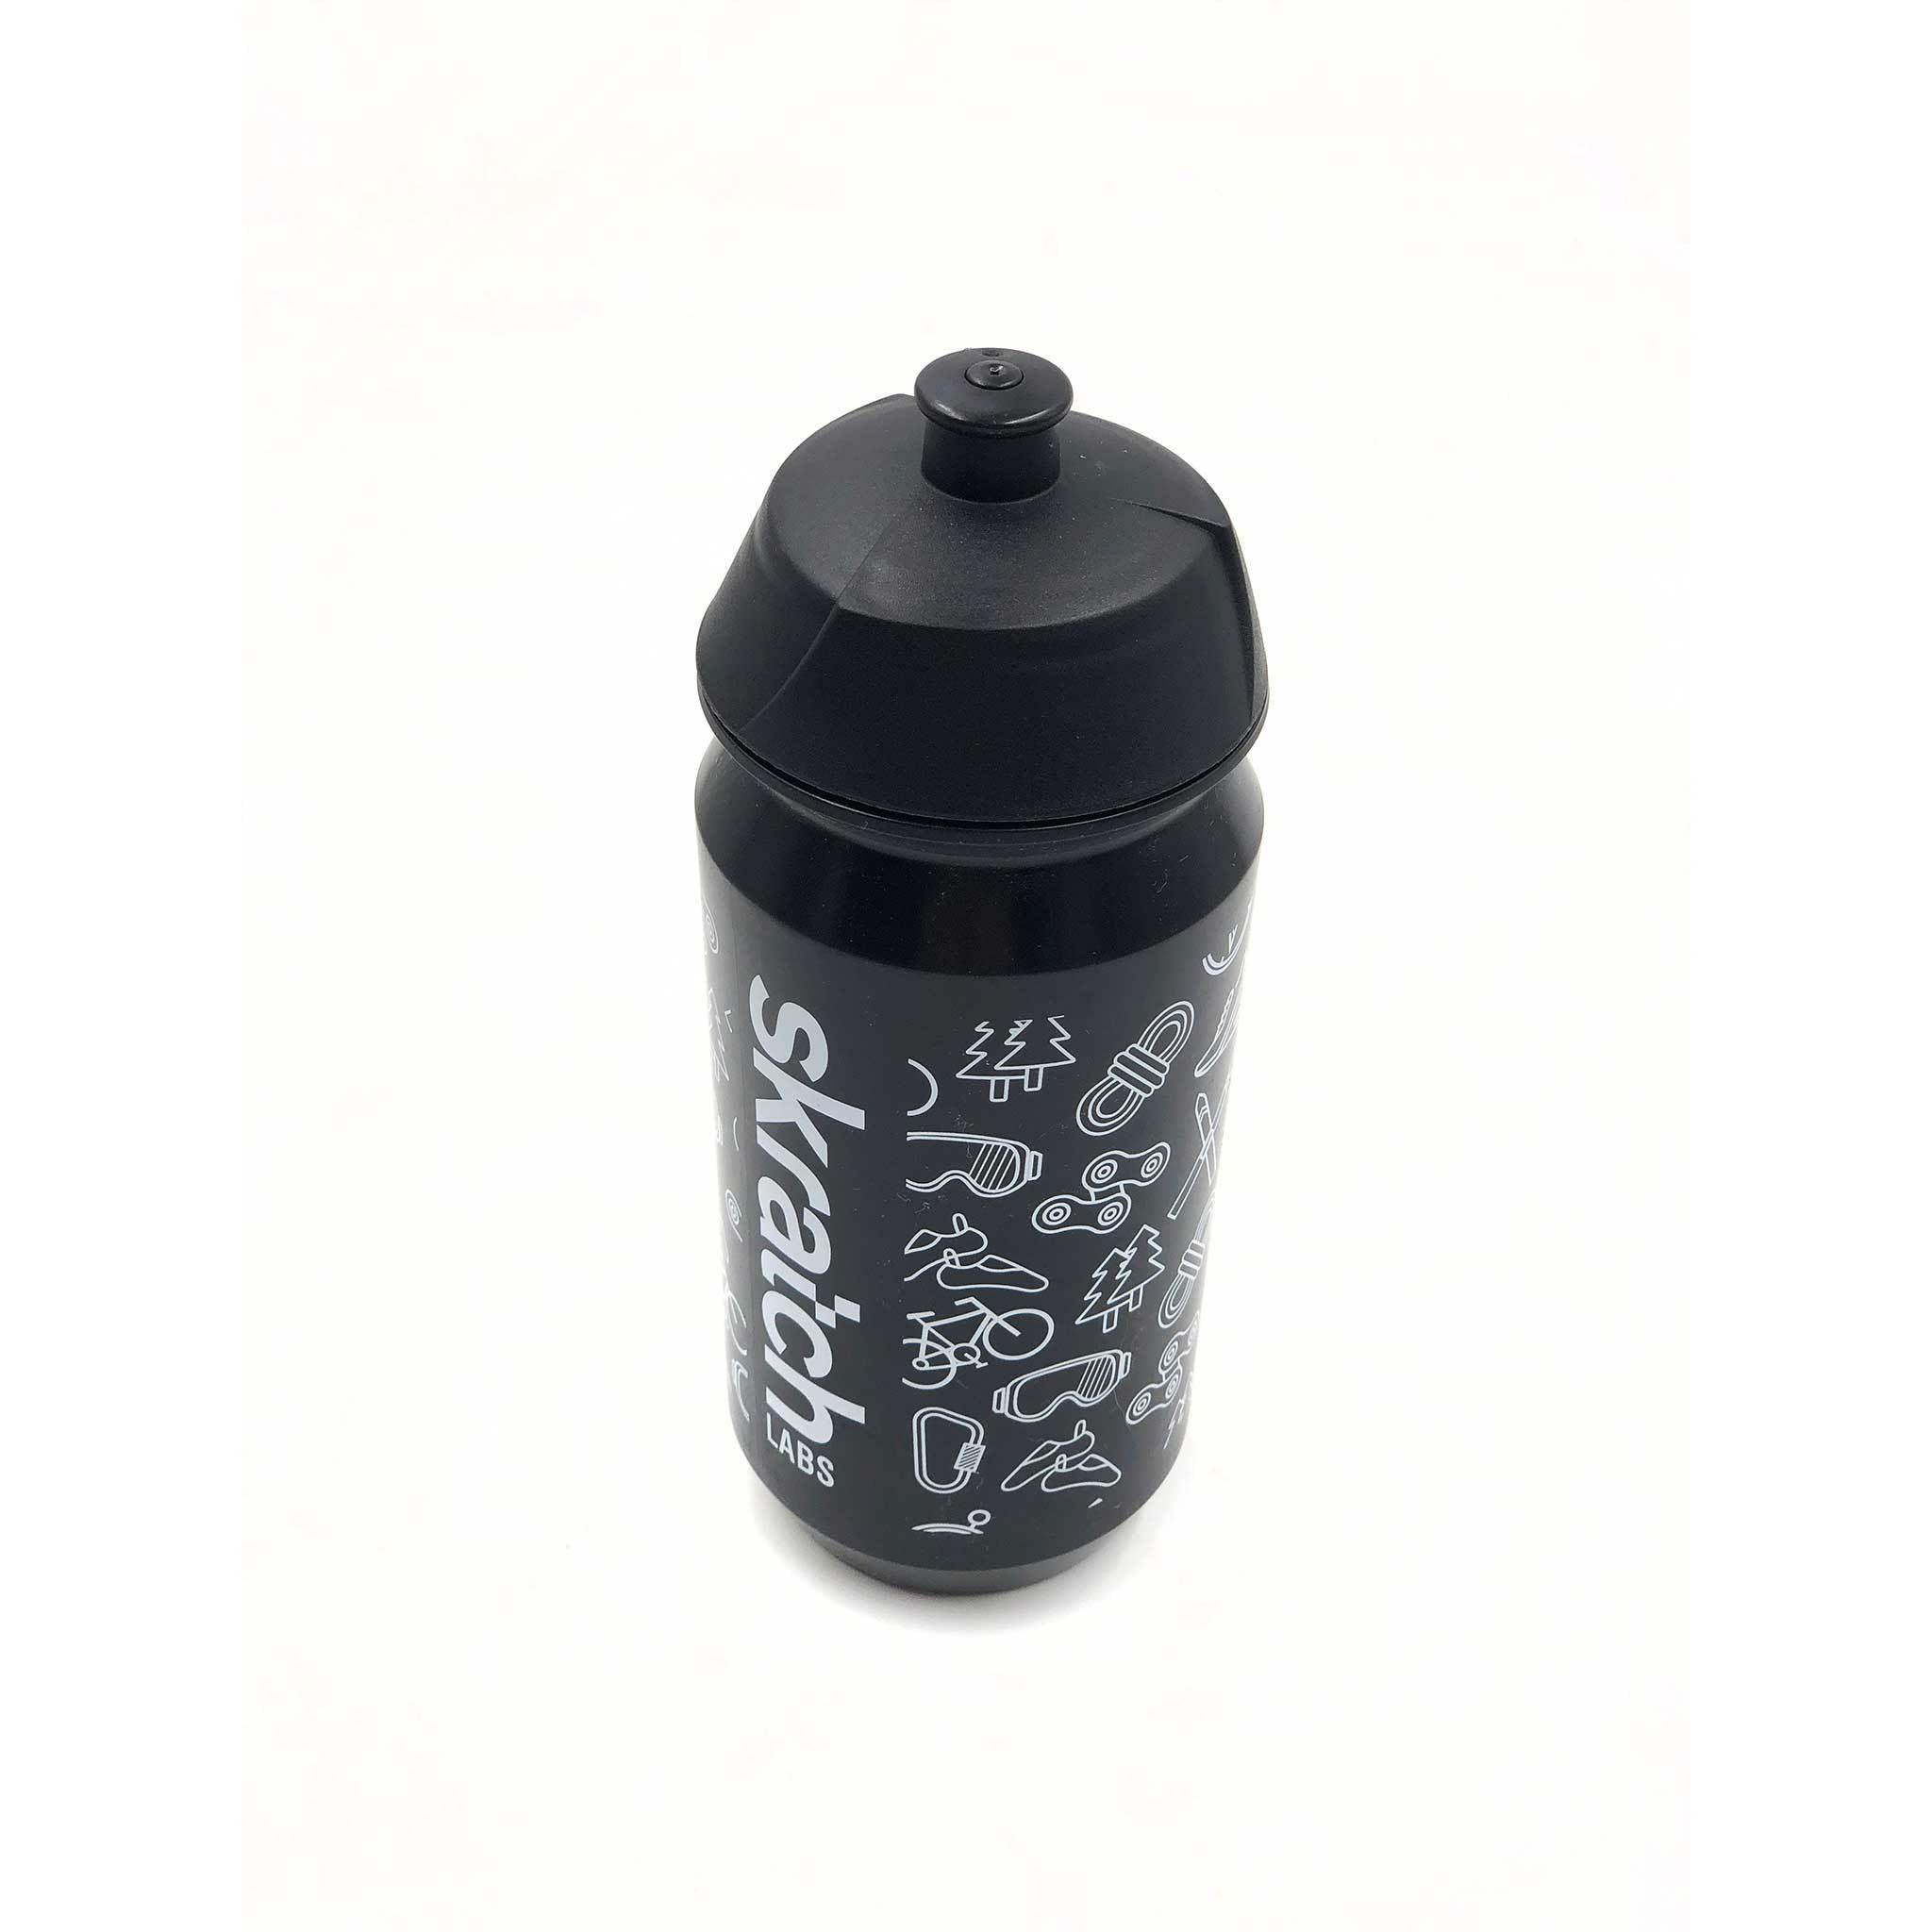 Skratch Multisport Tacx Water Bottle - 16oz (500ml) - Skratch Labs